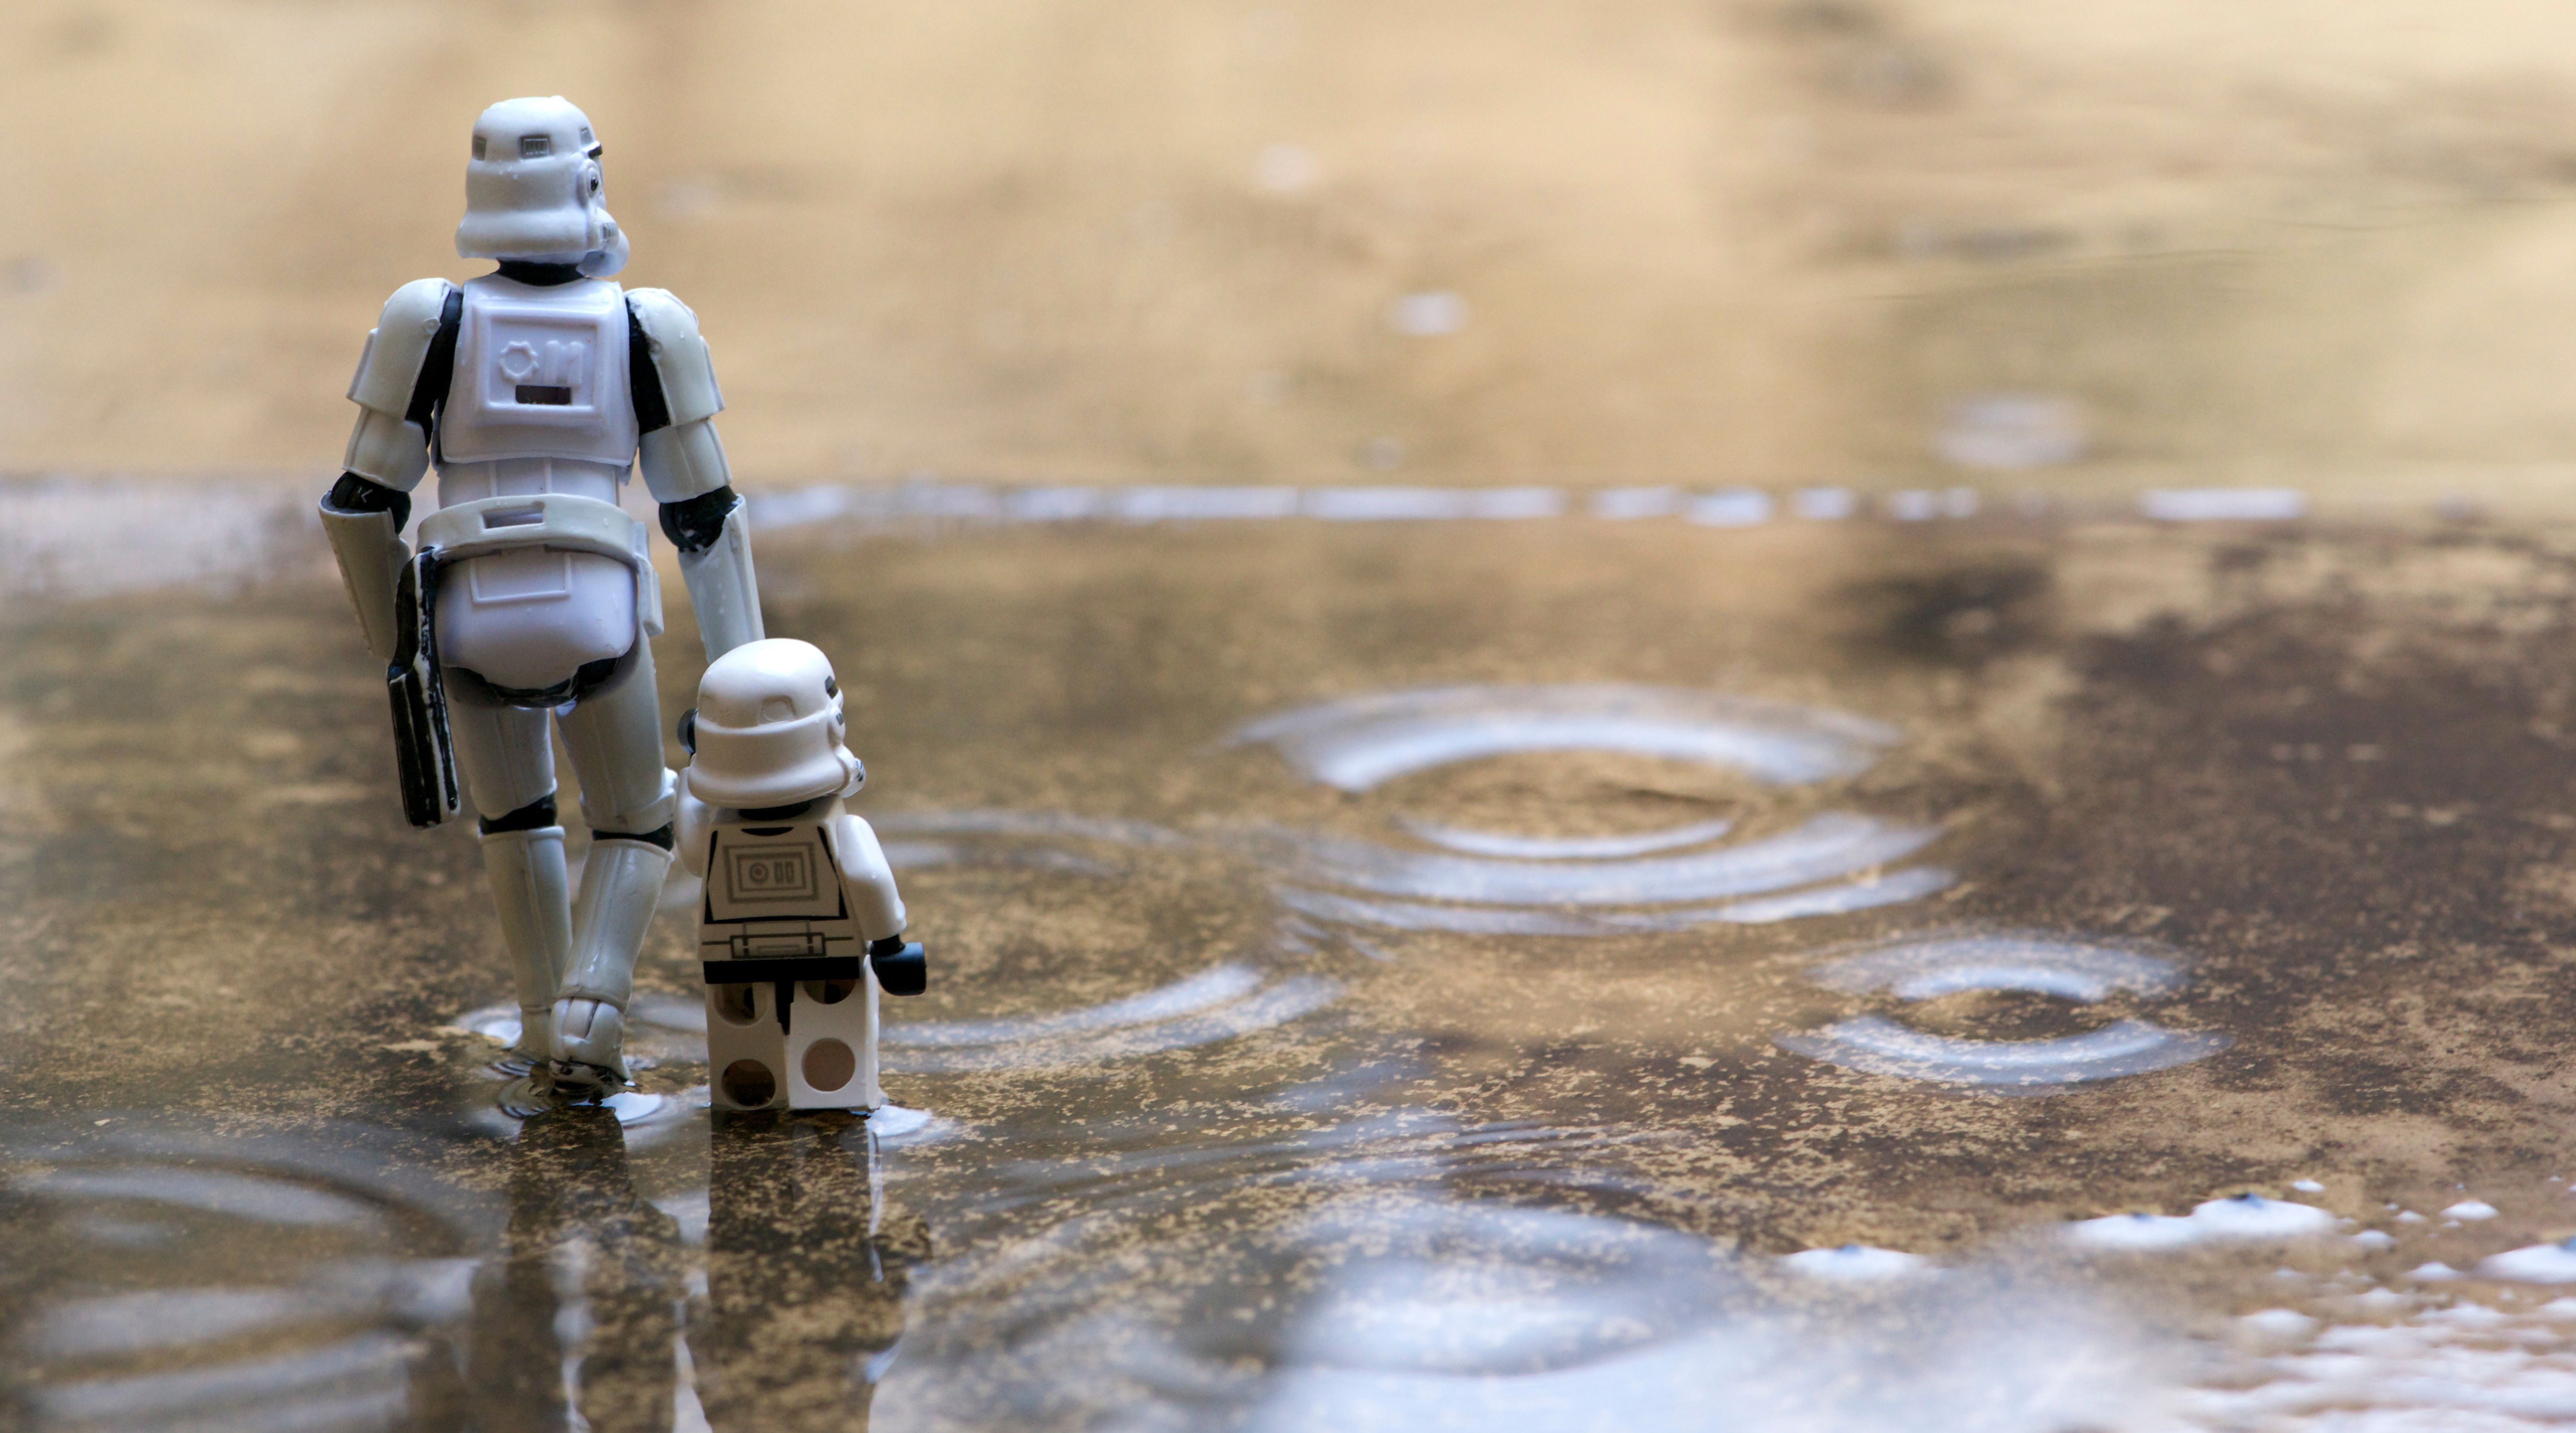 General 6200x3450 Star Wars stormtrooper LEGO rain pond toys humor wet beige figurines action figures water outdoors movie characters